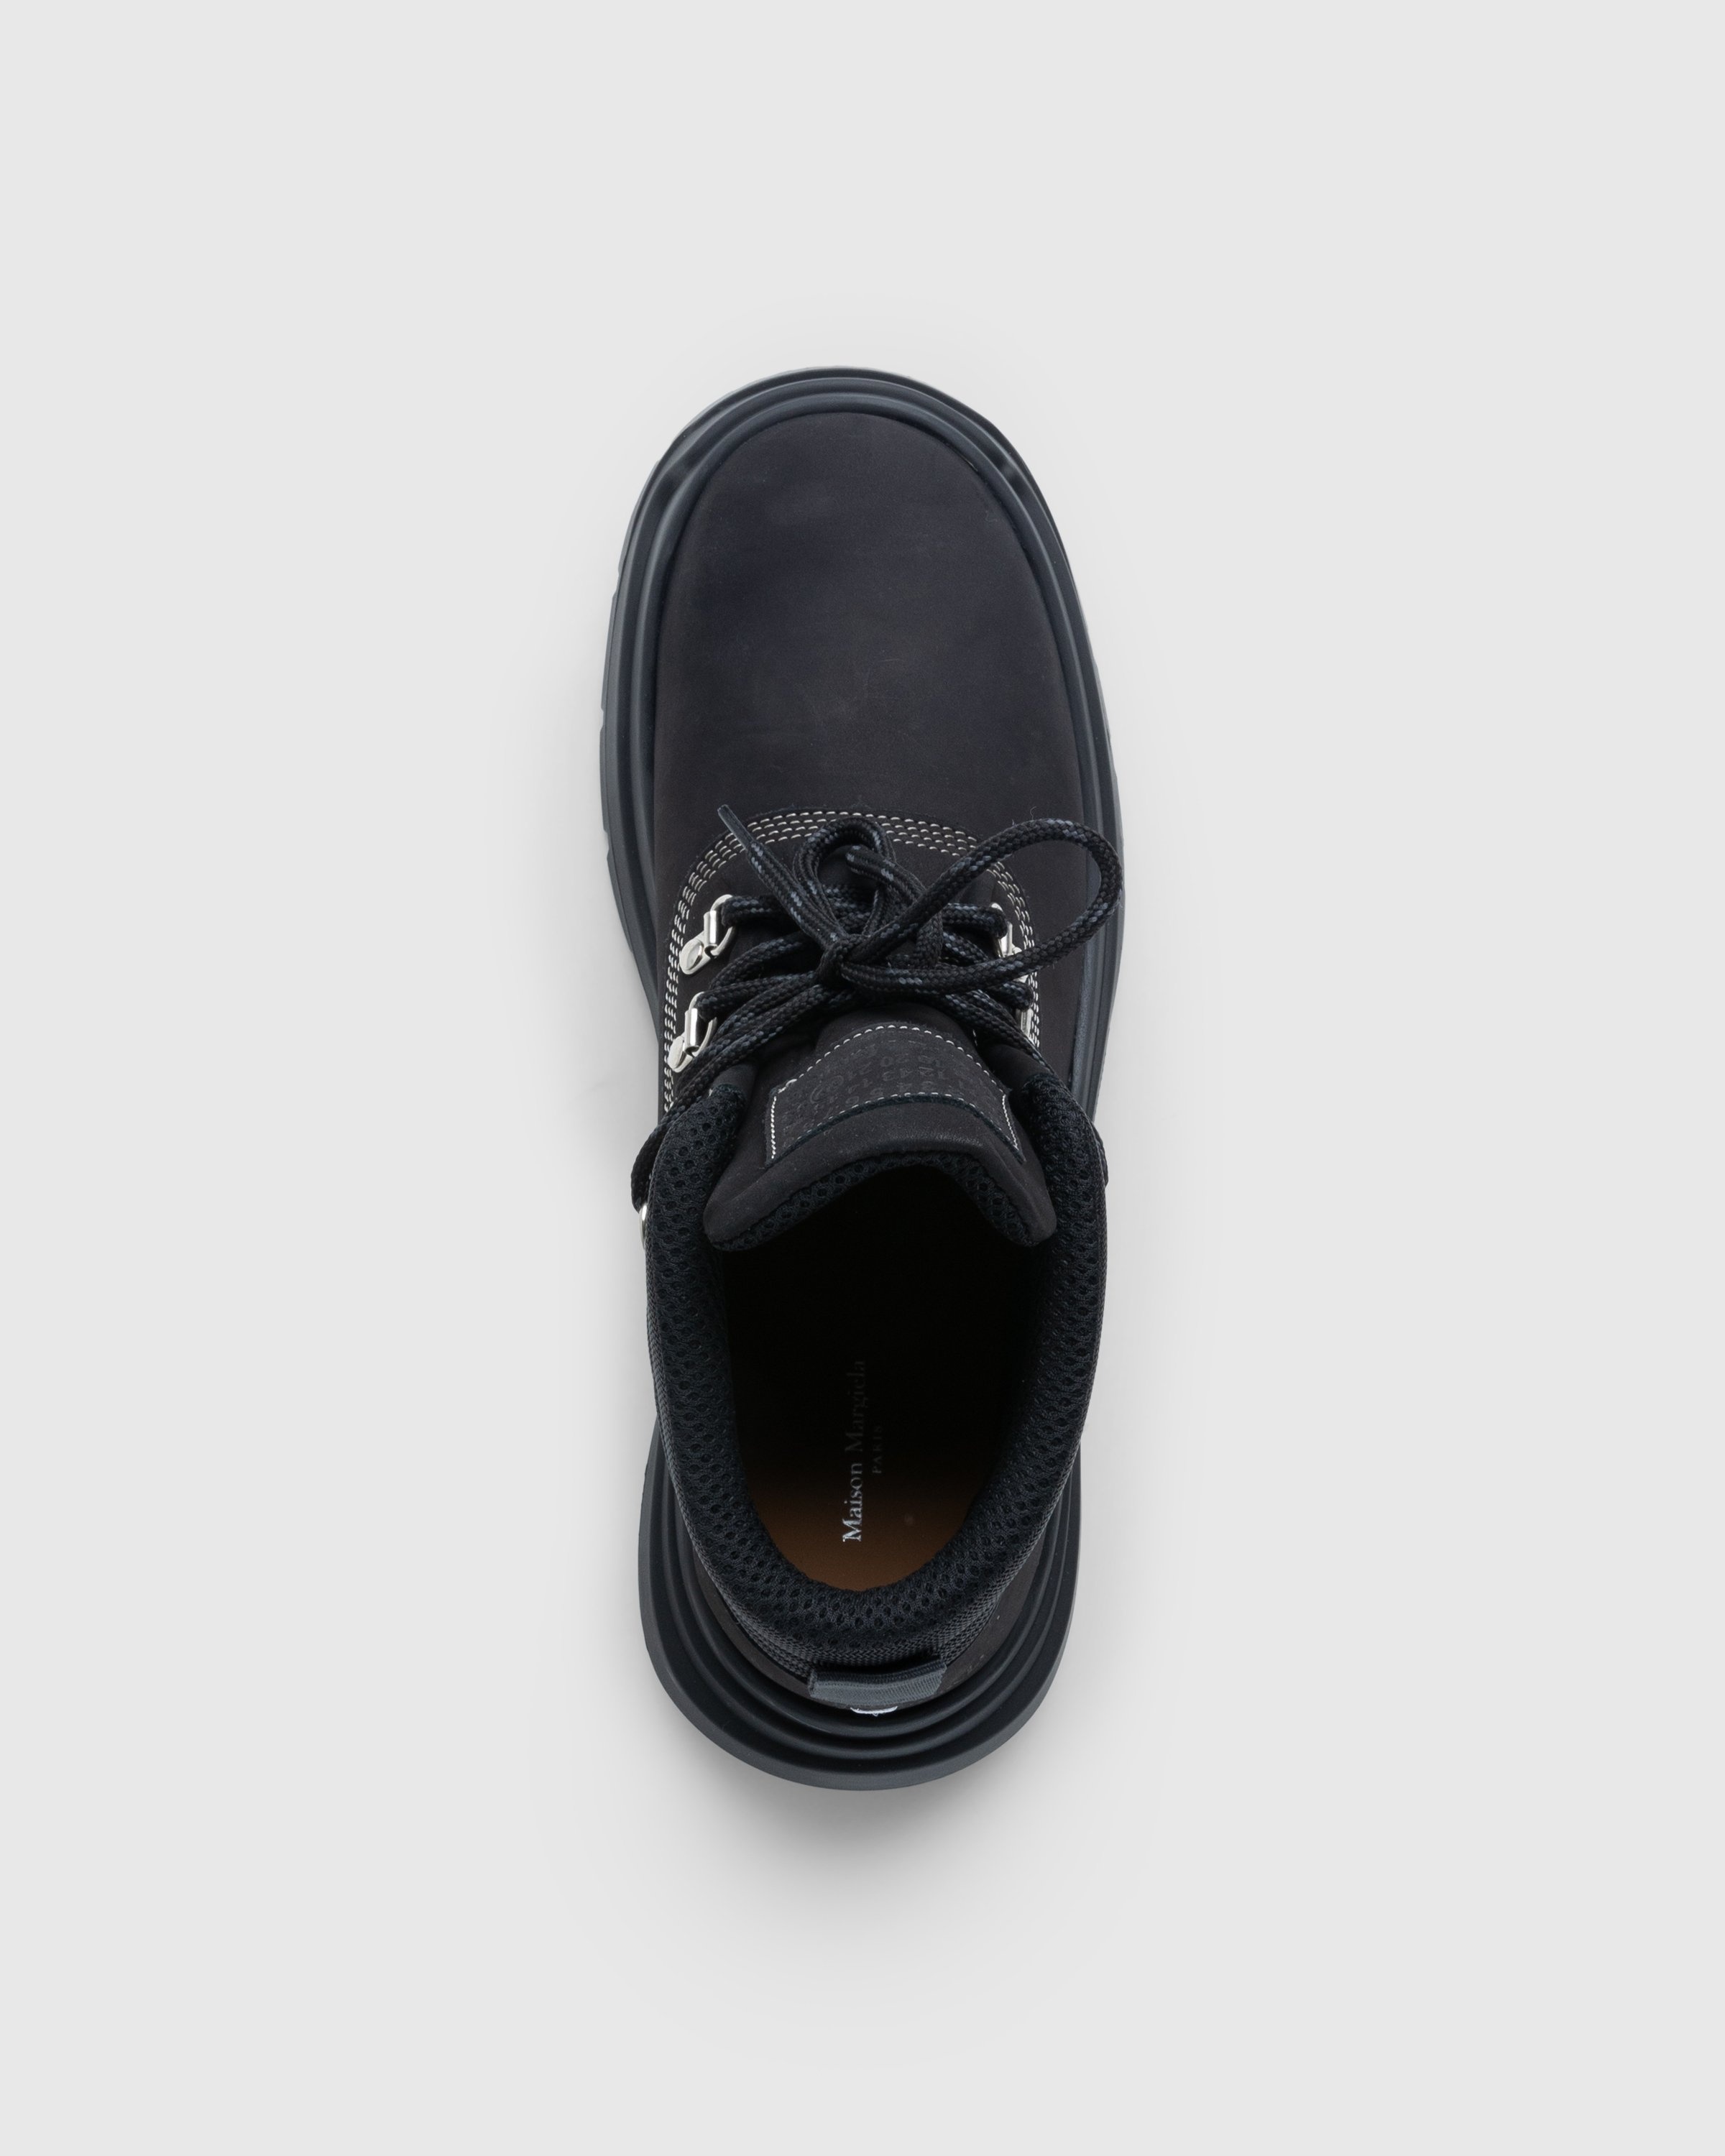 Maison Margiela – Alex Hiking Boot Black/Black - Sneakers - Black - Image 5